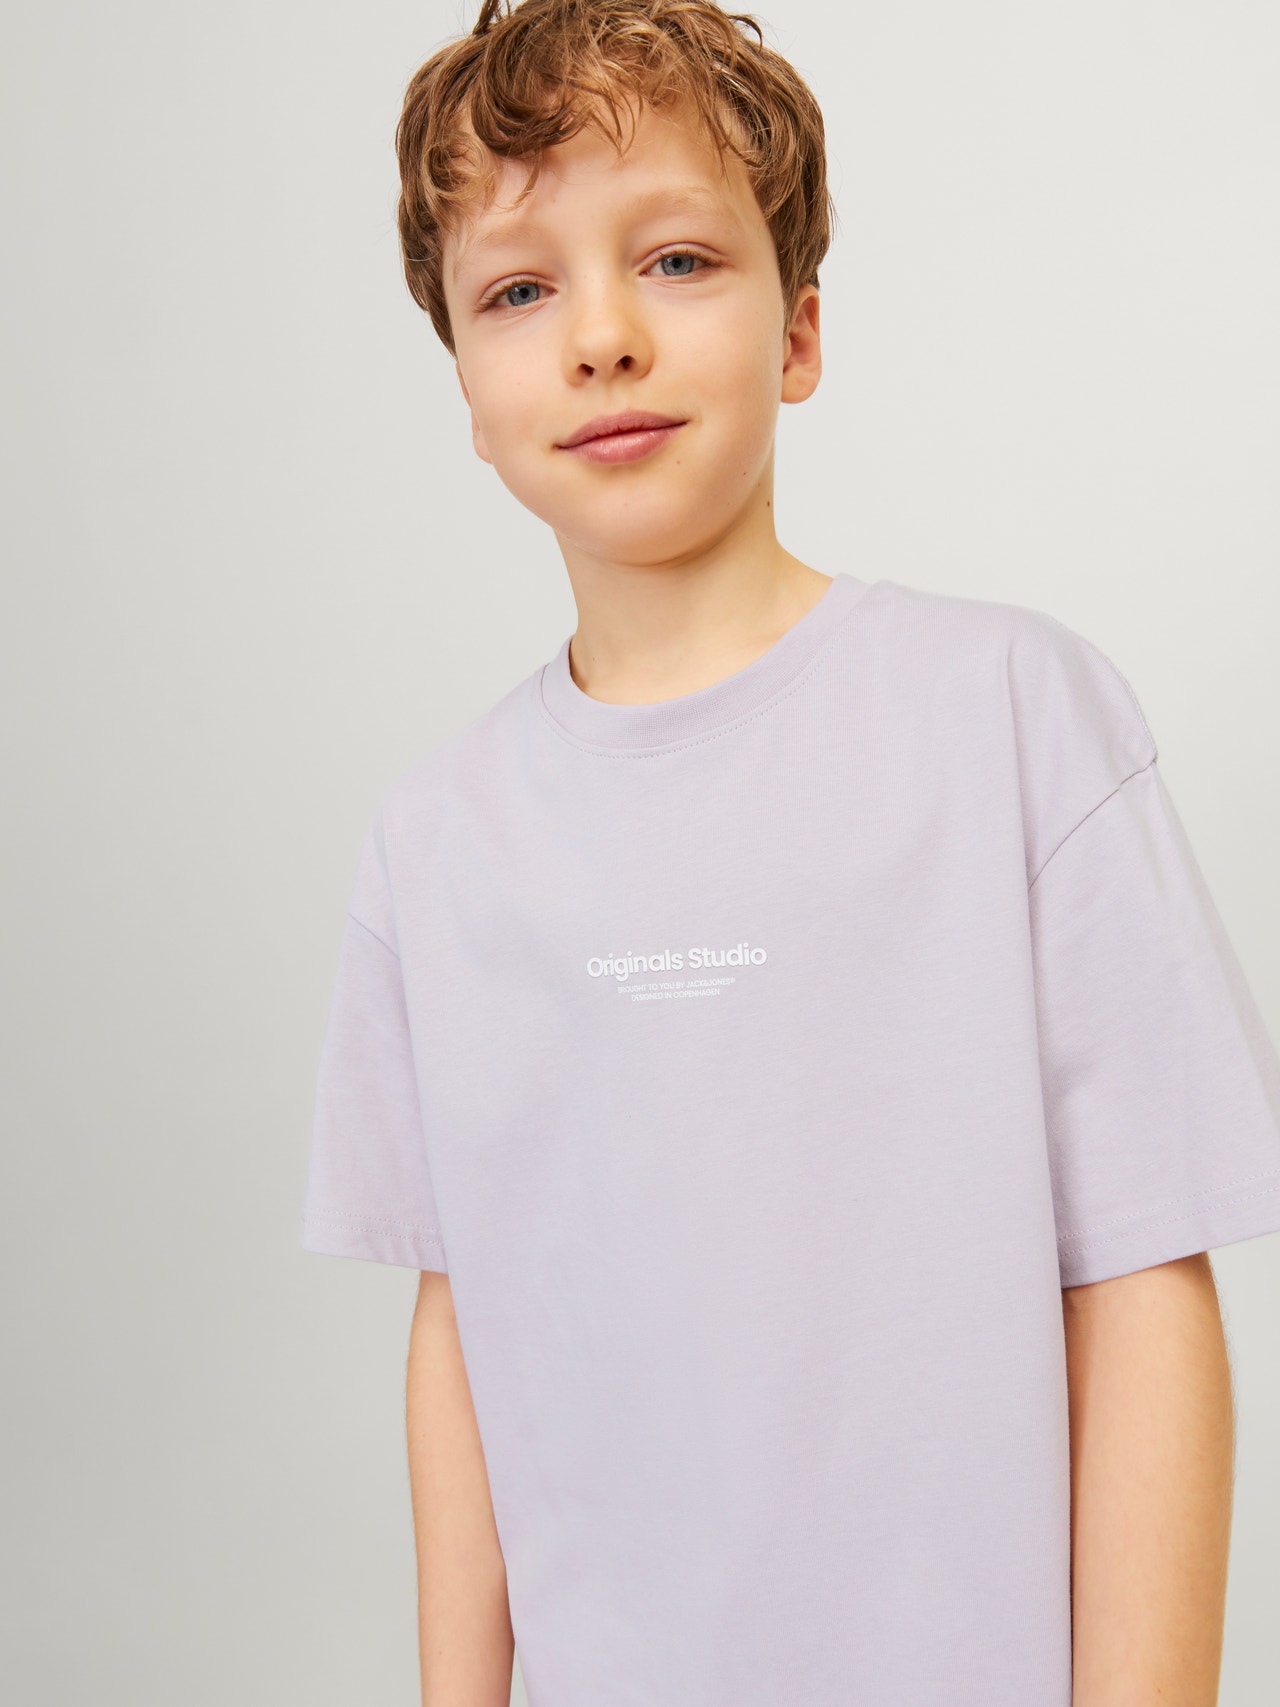 Jack & Jones Καλοκαιρινό μπλουζάκι -Lavender Frost - 12242827